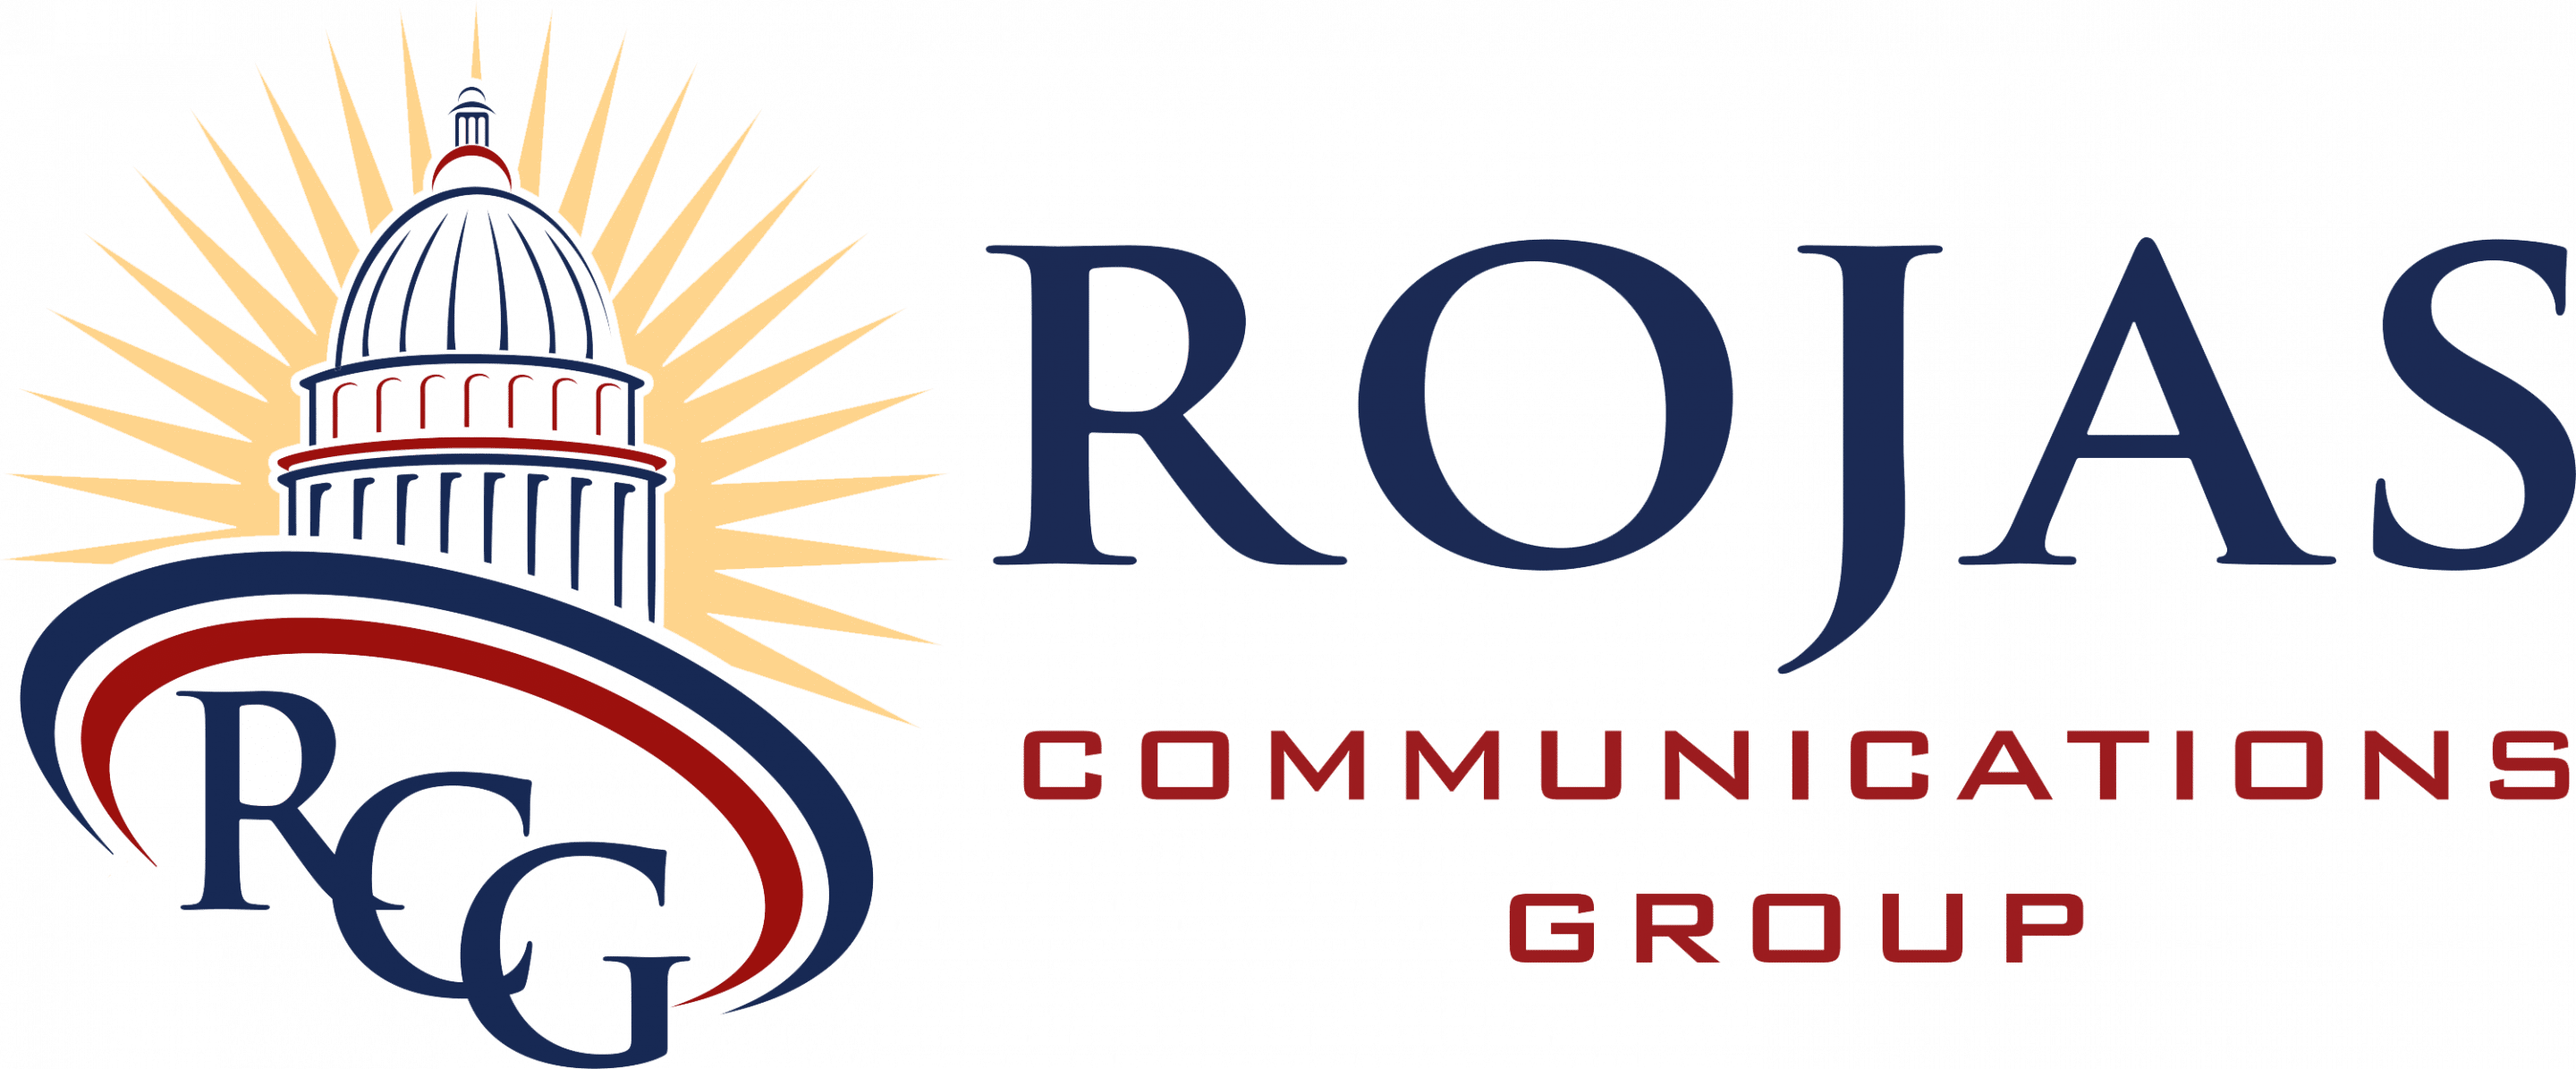 The RCG Communications Group logo